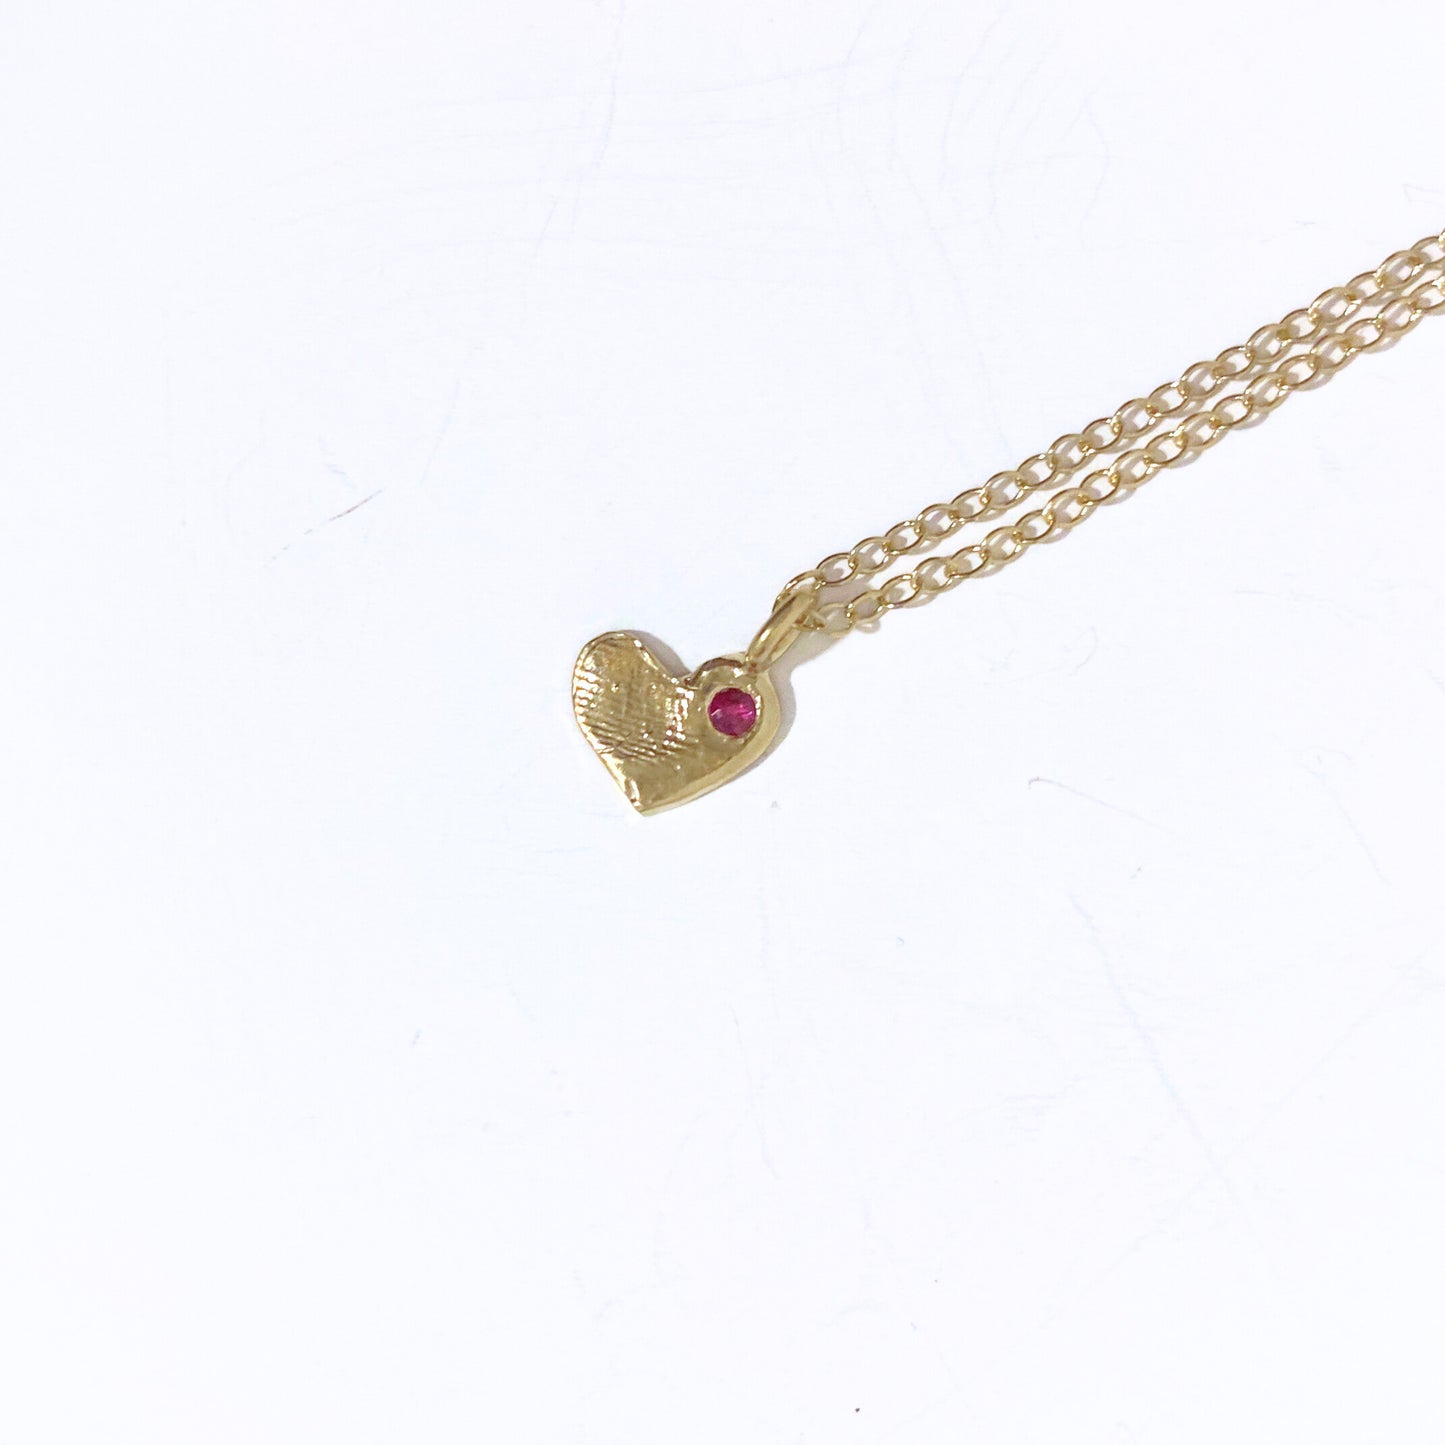 14K Gold Heart Fingerprint Necklace